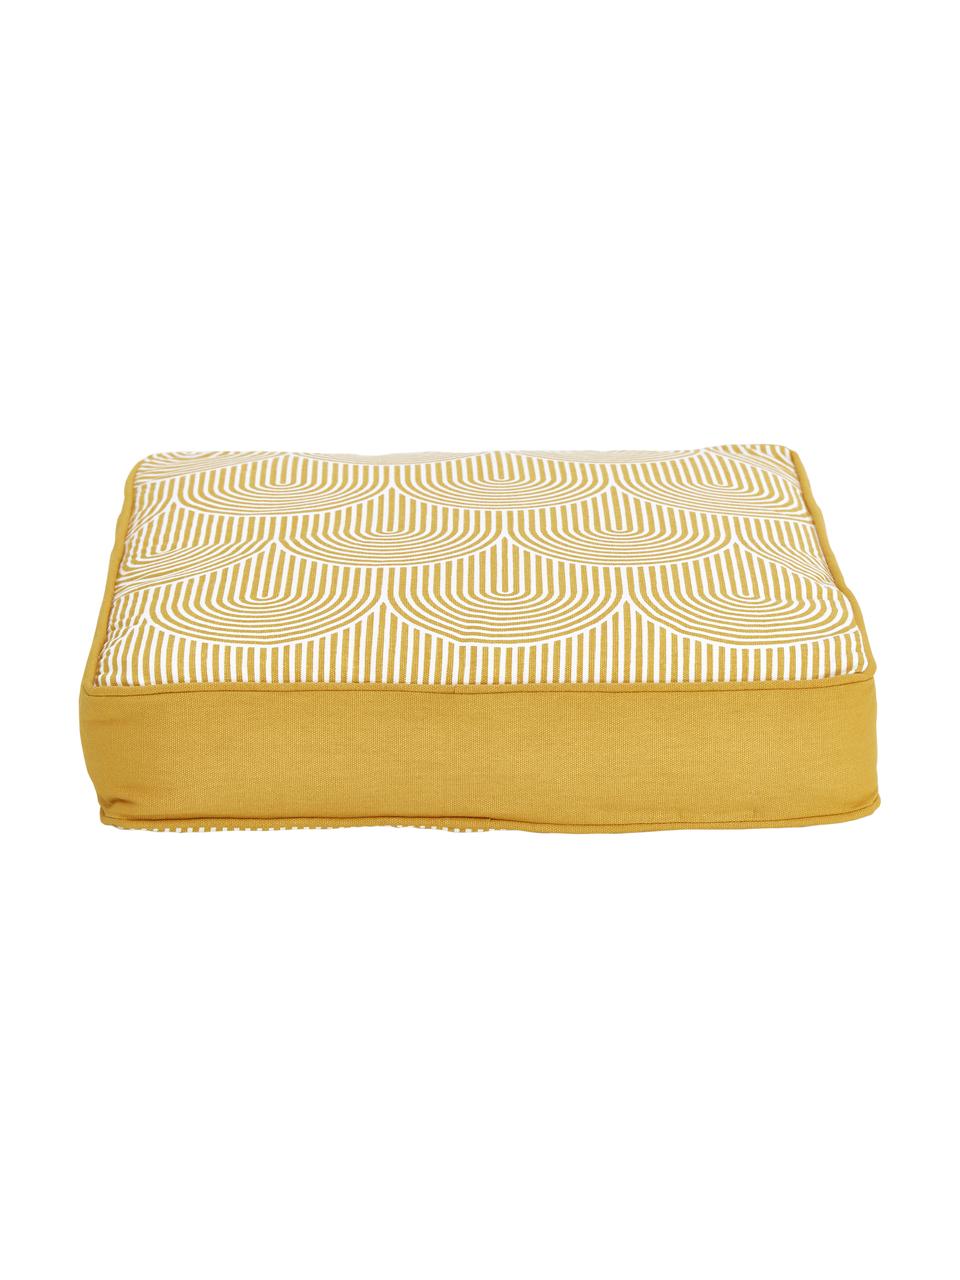 Cojín de asiento alto Arc, Funda: 100% algodón, Amarillo, An 40 x L 40 cm